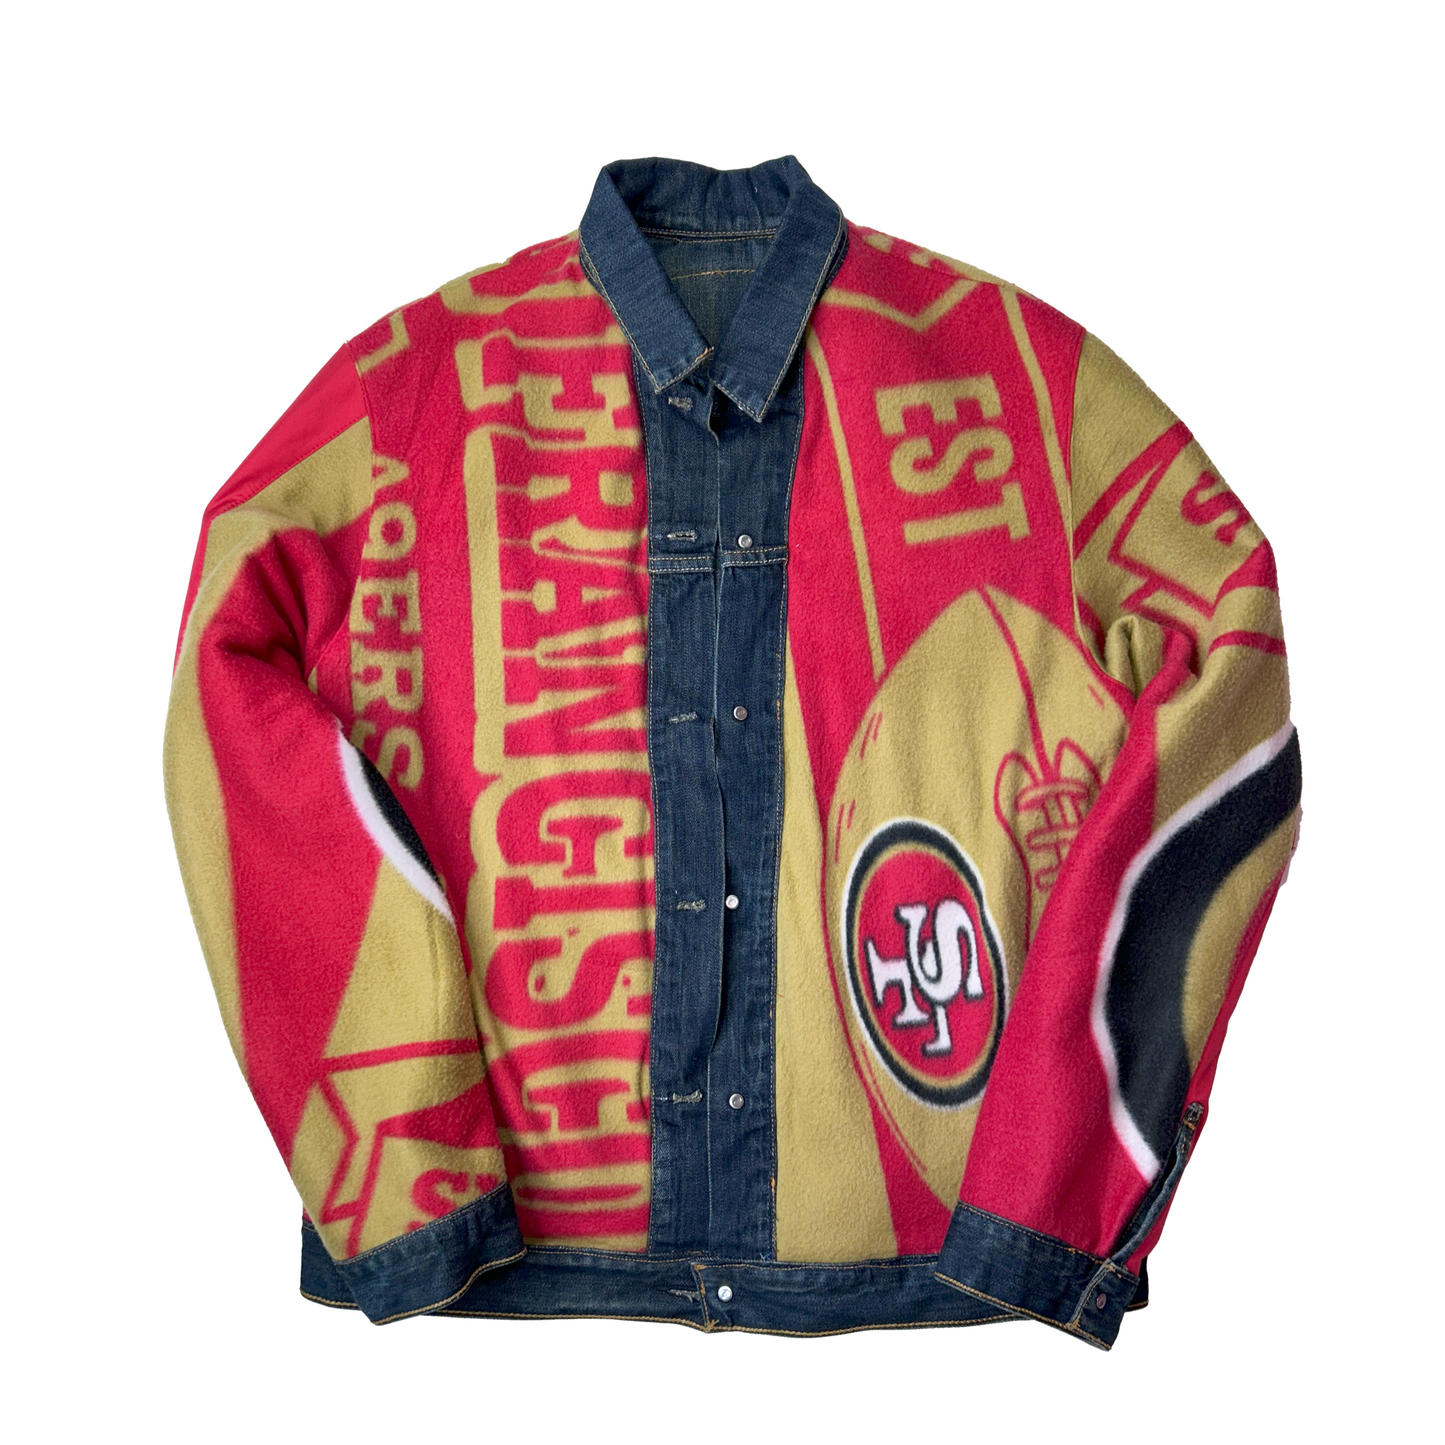 San Francisco 49ers Reversible Jacket.